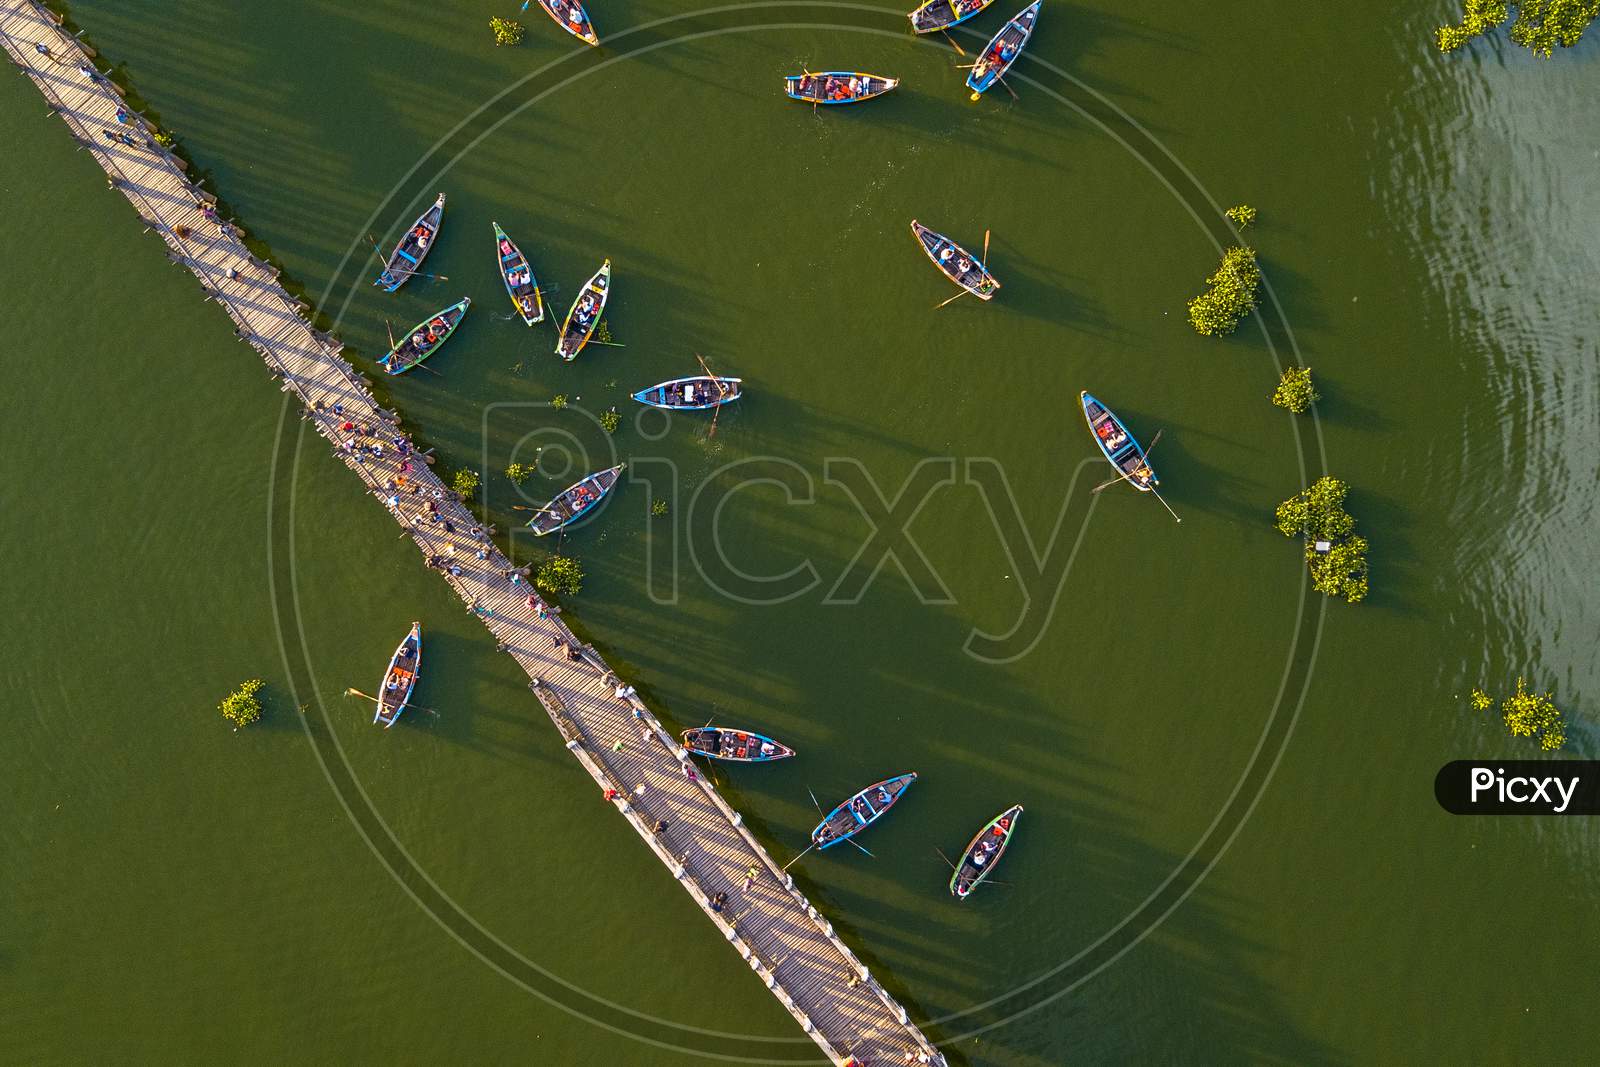 U BEIN BRIDGE is one of the famous teakwood bridge in the world. Located in Mandalay, Myanmar.